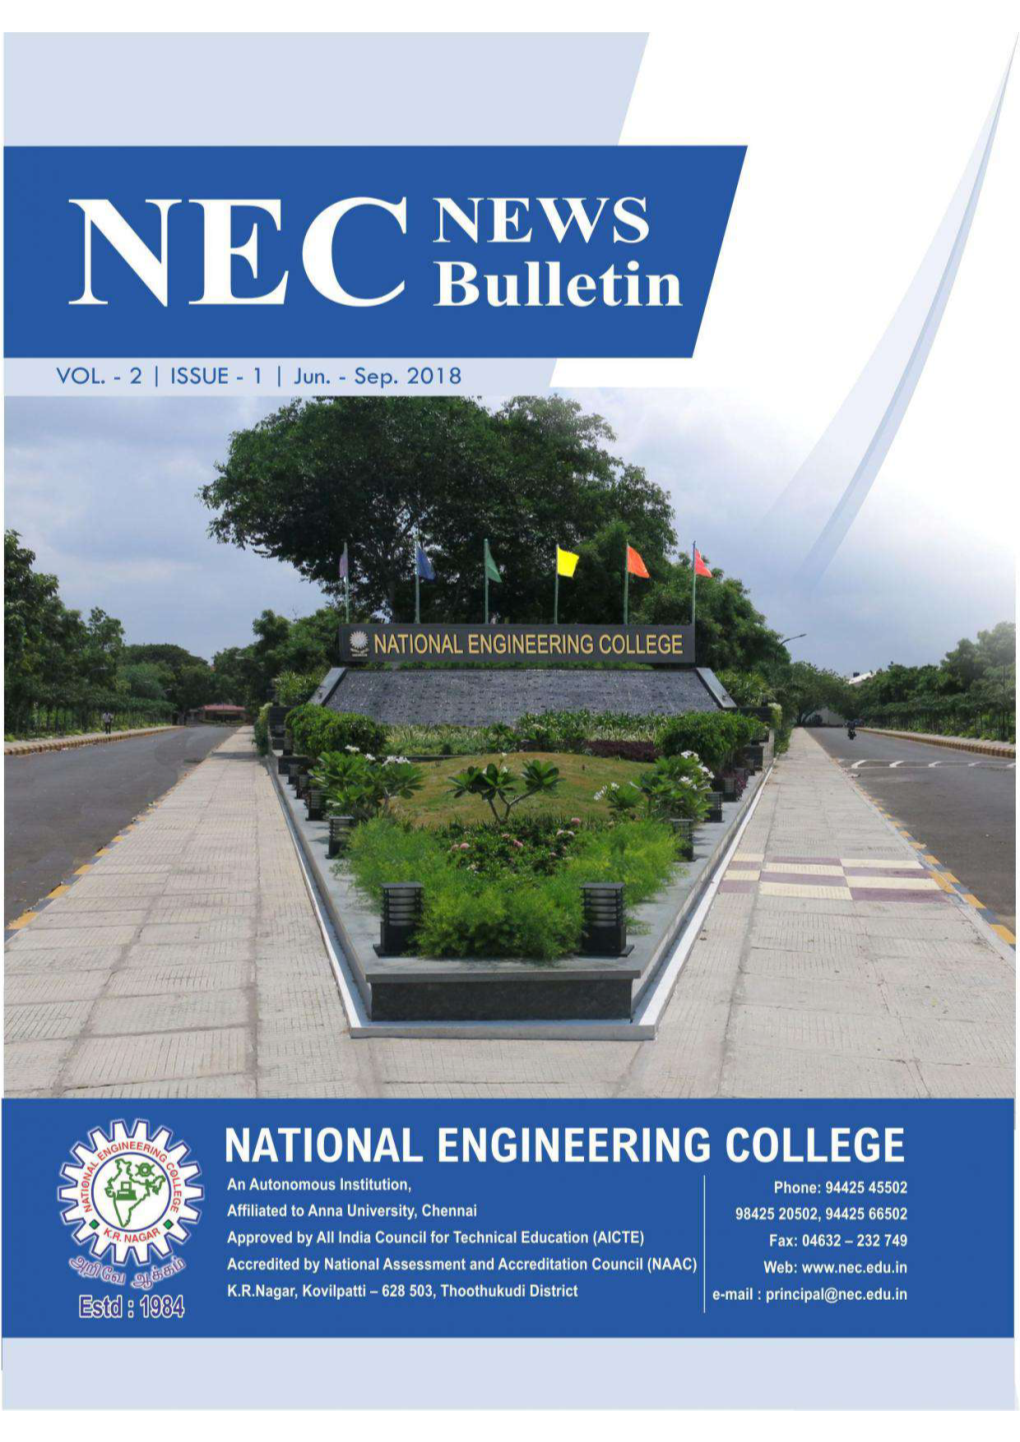 National Engineering College NEWS Bulletin